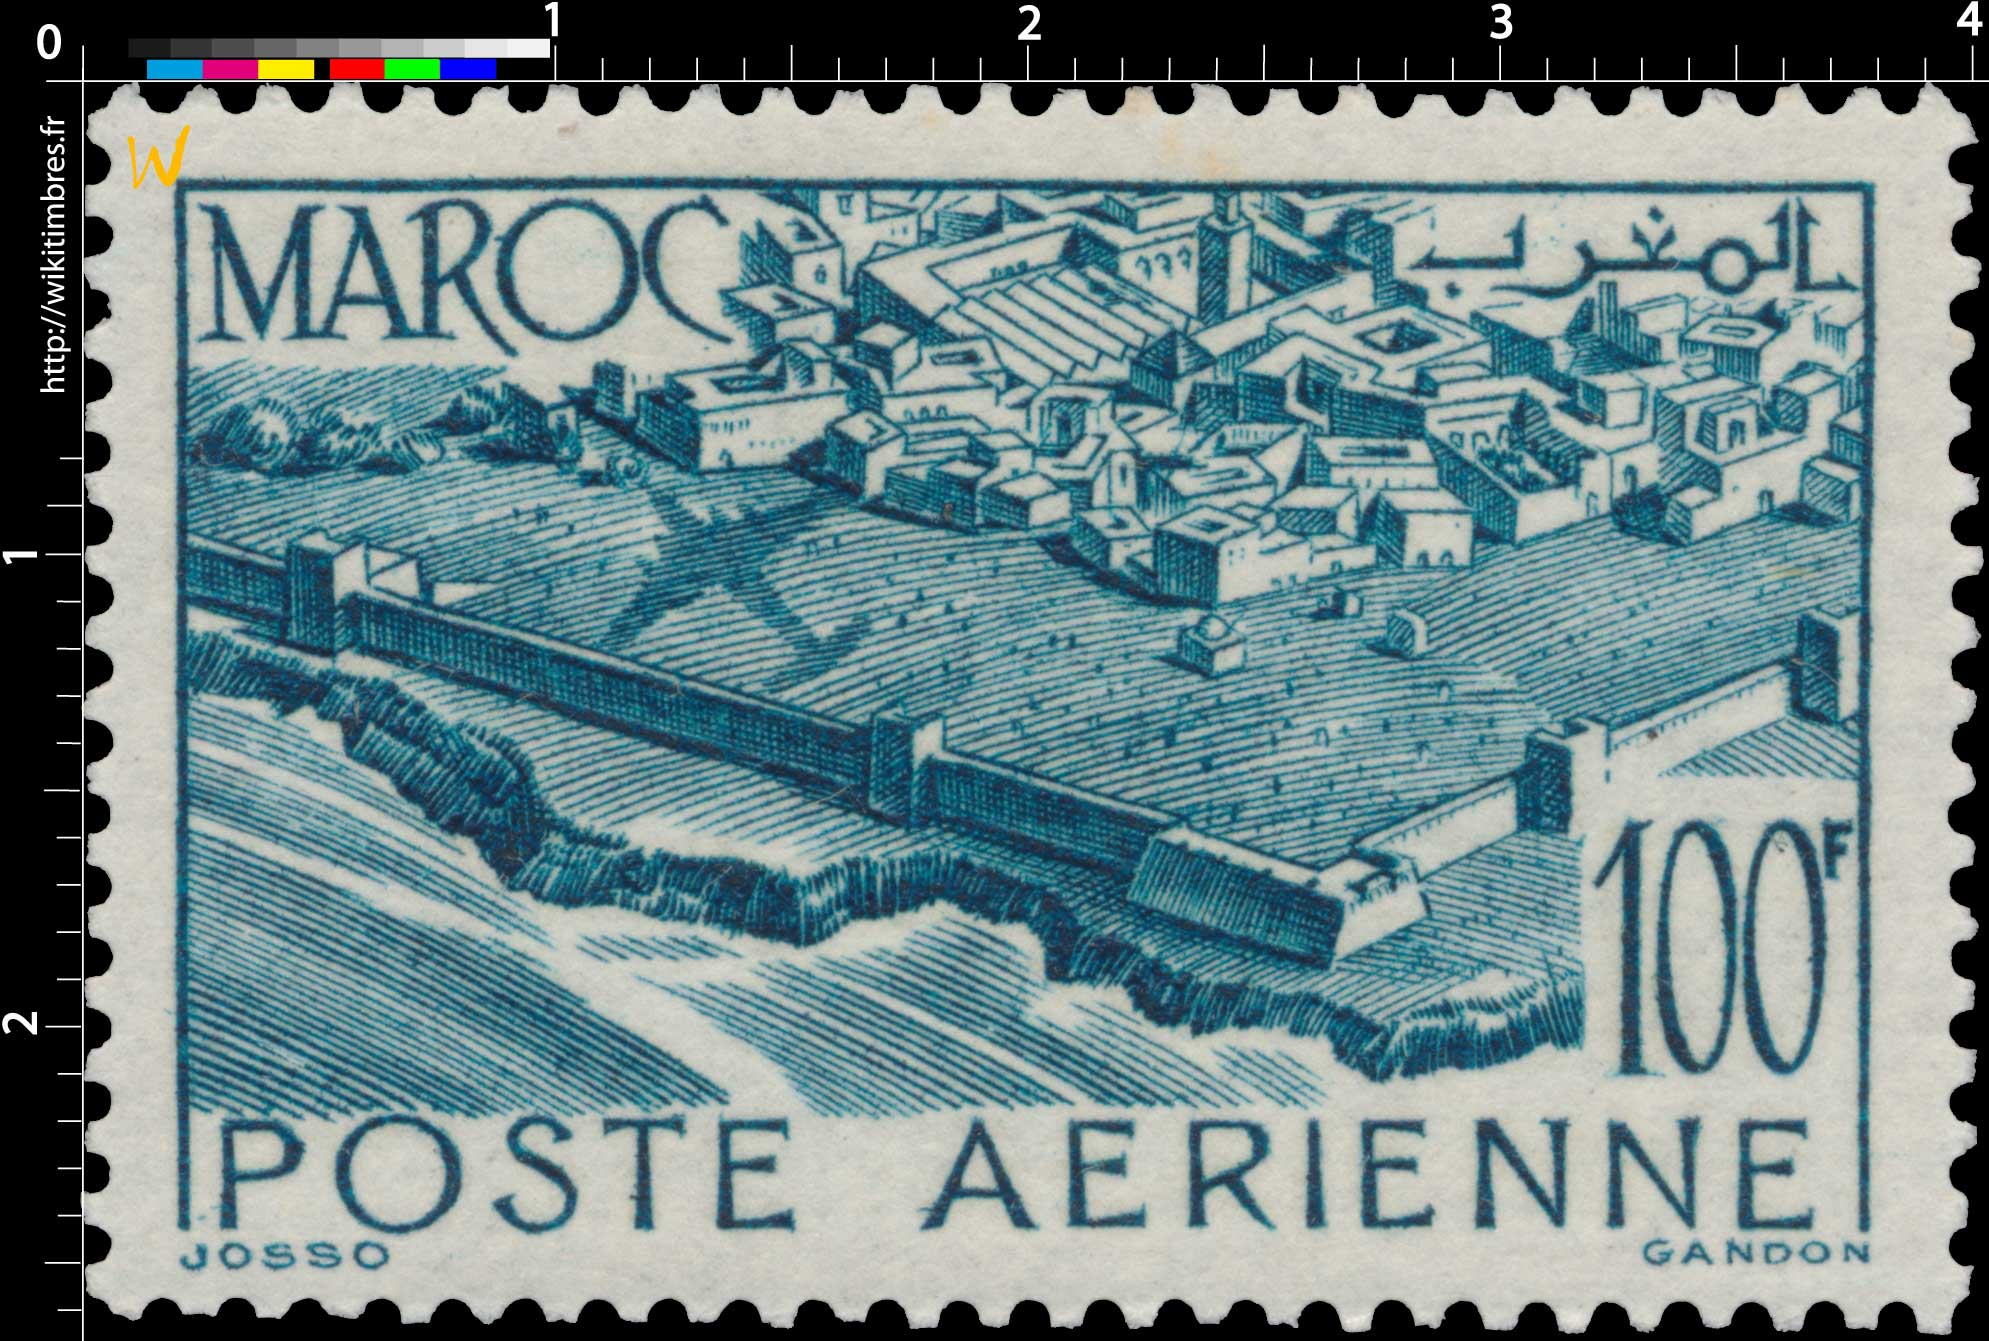 1947 Maroc - Remparts de Salé